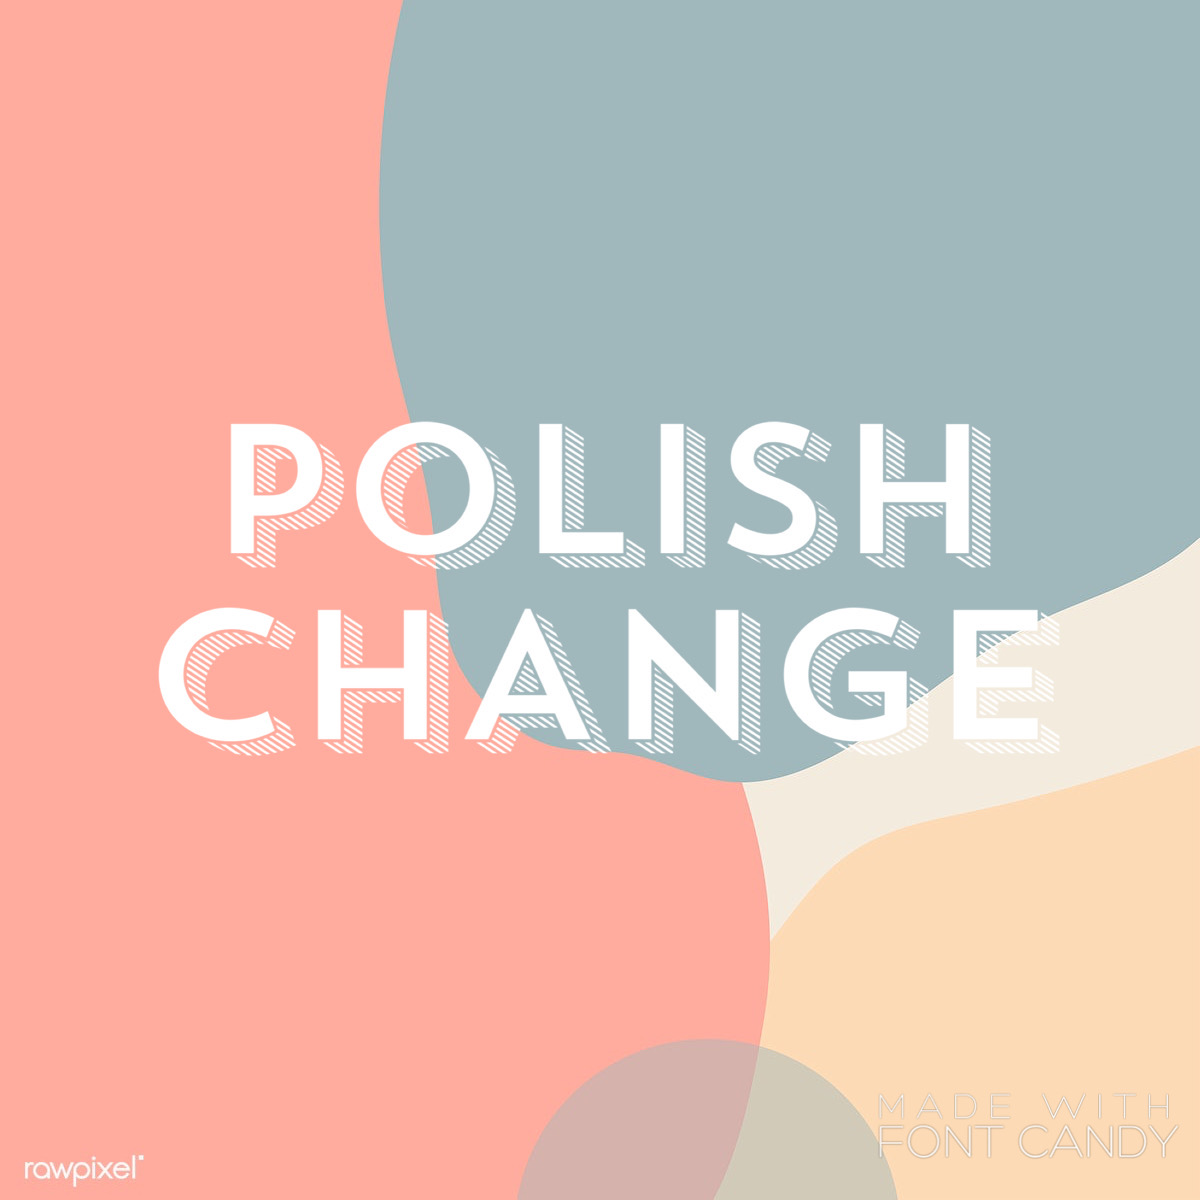 Polish Change